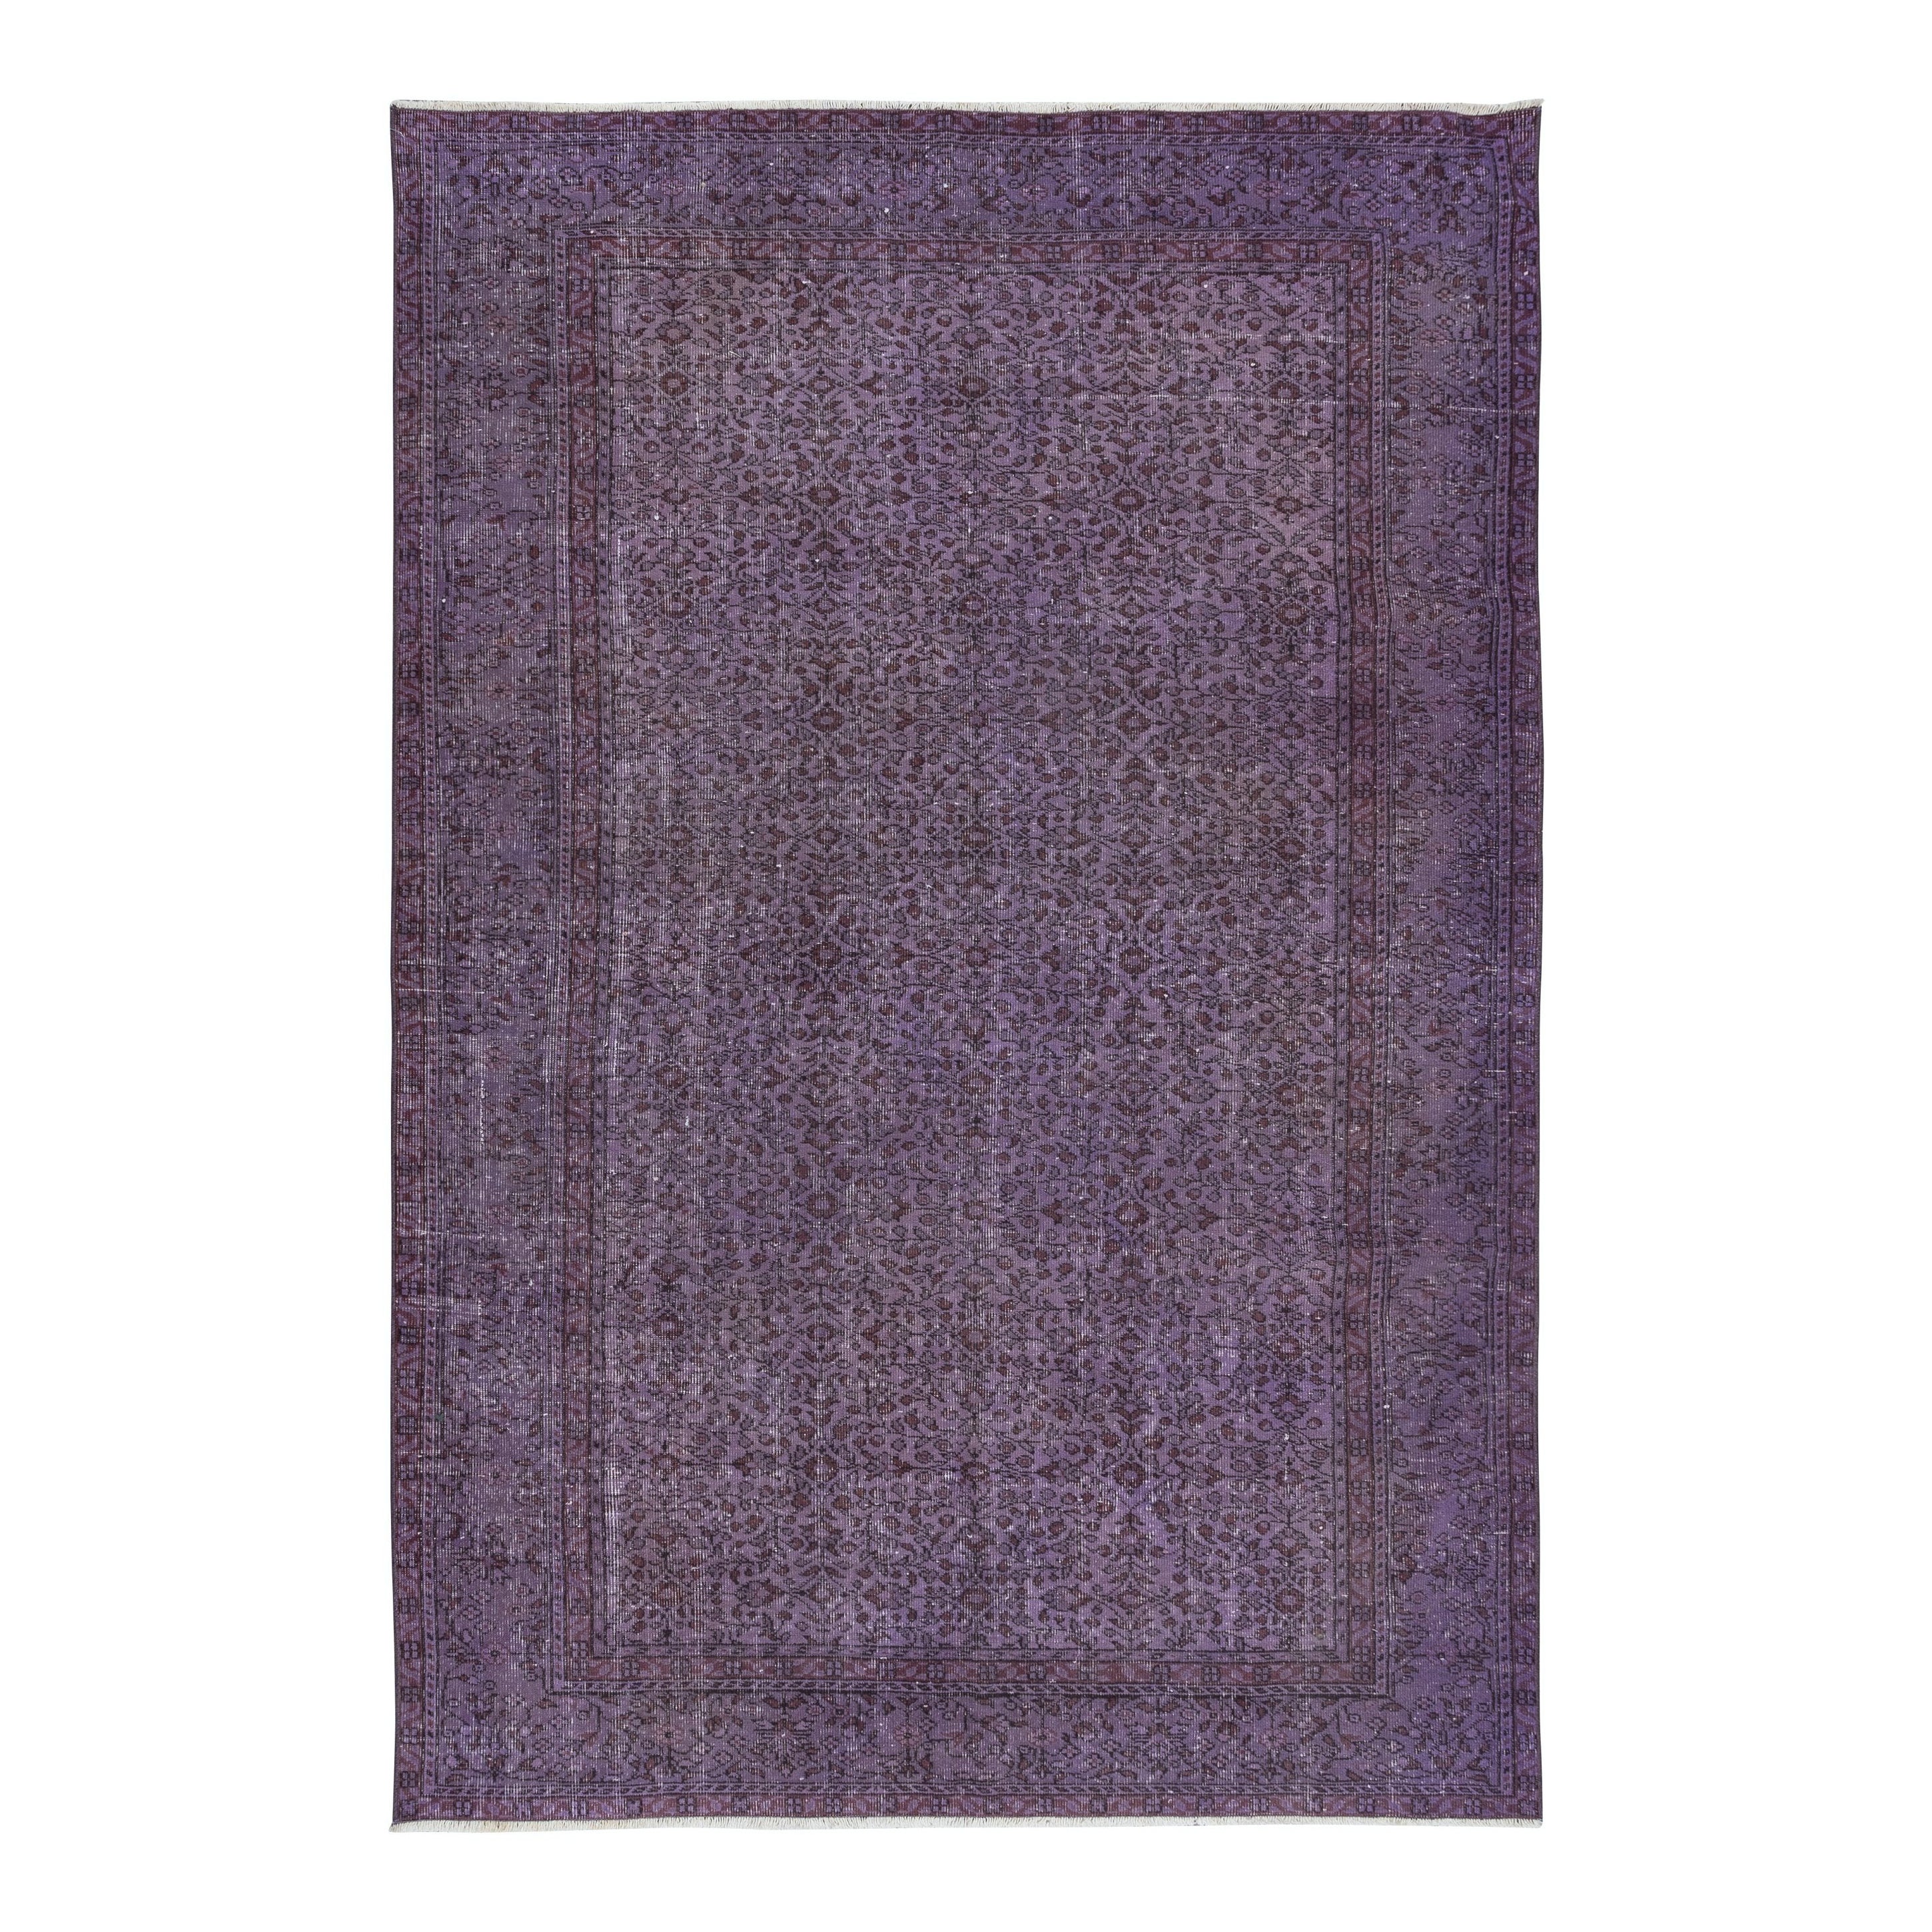 6.2x9.3 Ft Splendid Handmade Turkish Rug with Flower Design & Purple Background